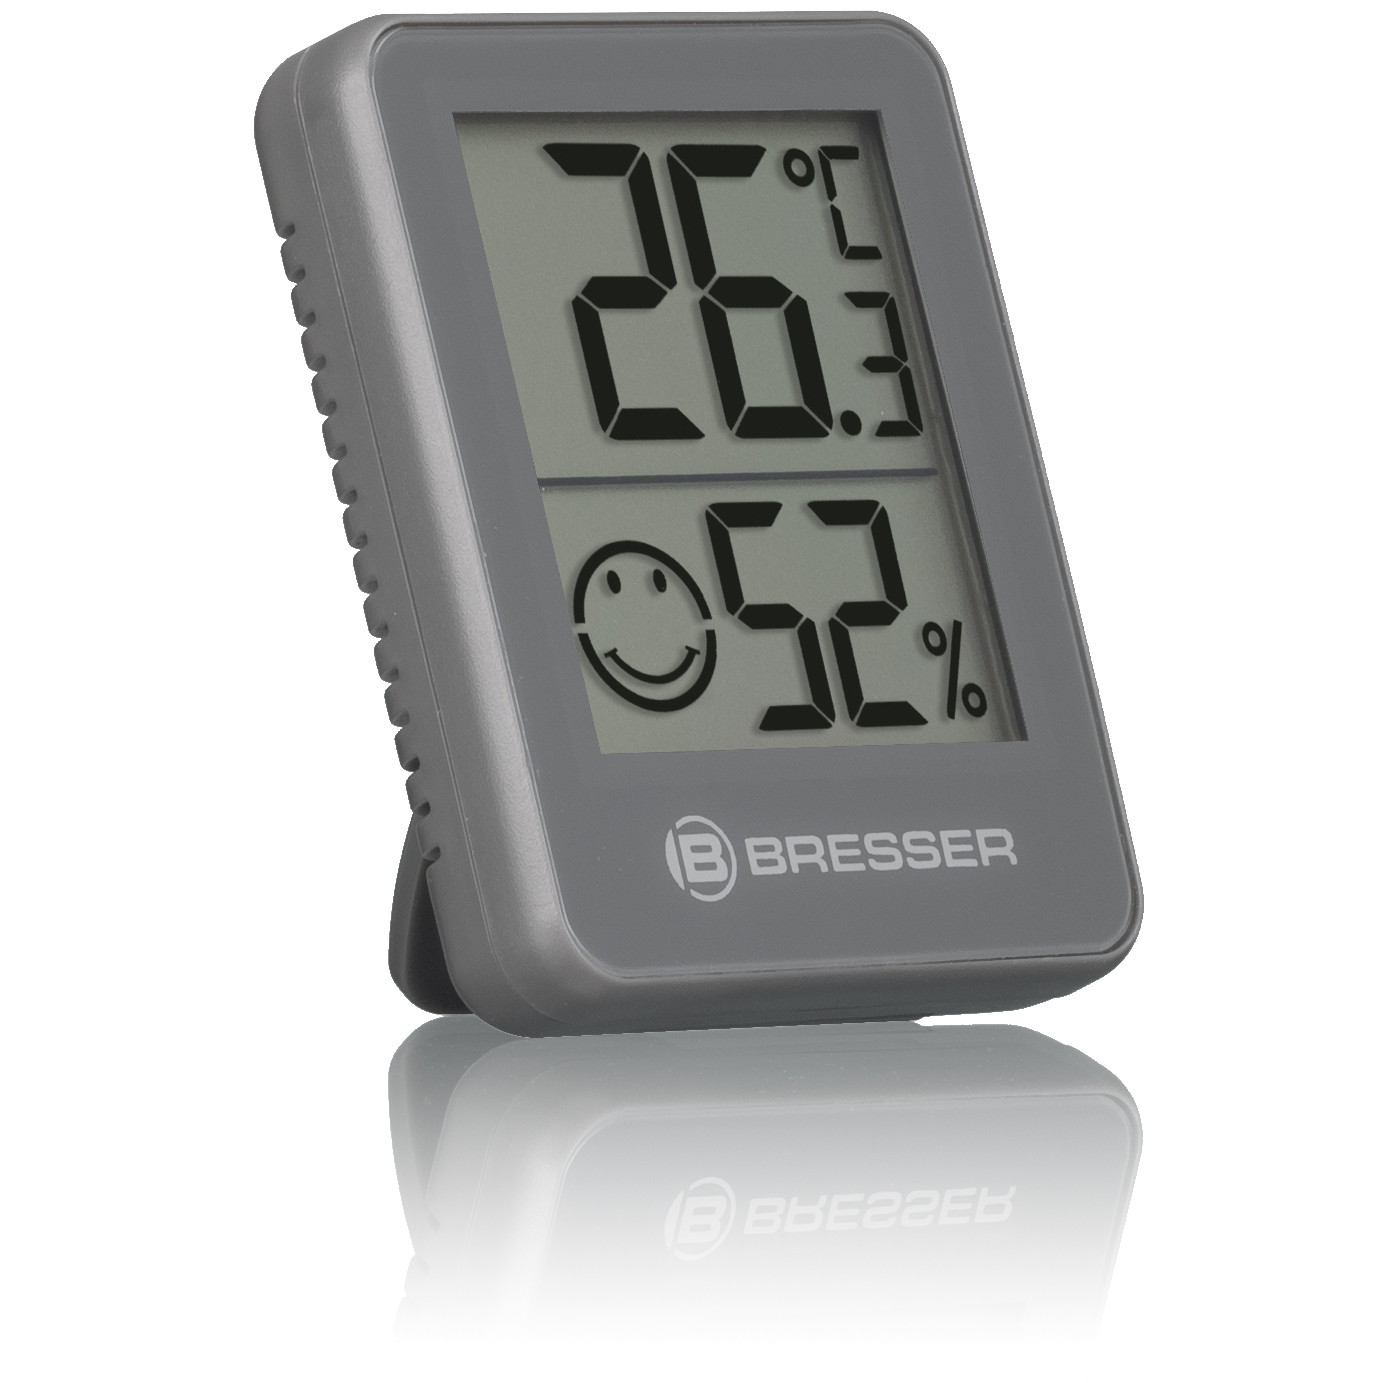 Hygro Thermo-/Hygrometer Indikator BRESSER Temeo 6er-Set Wetterstation